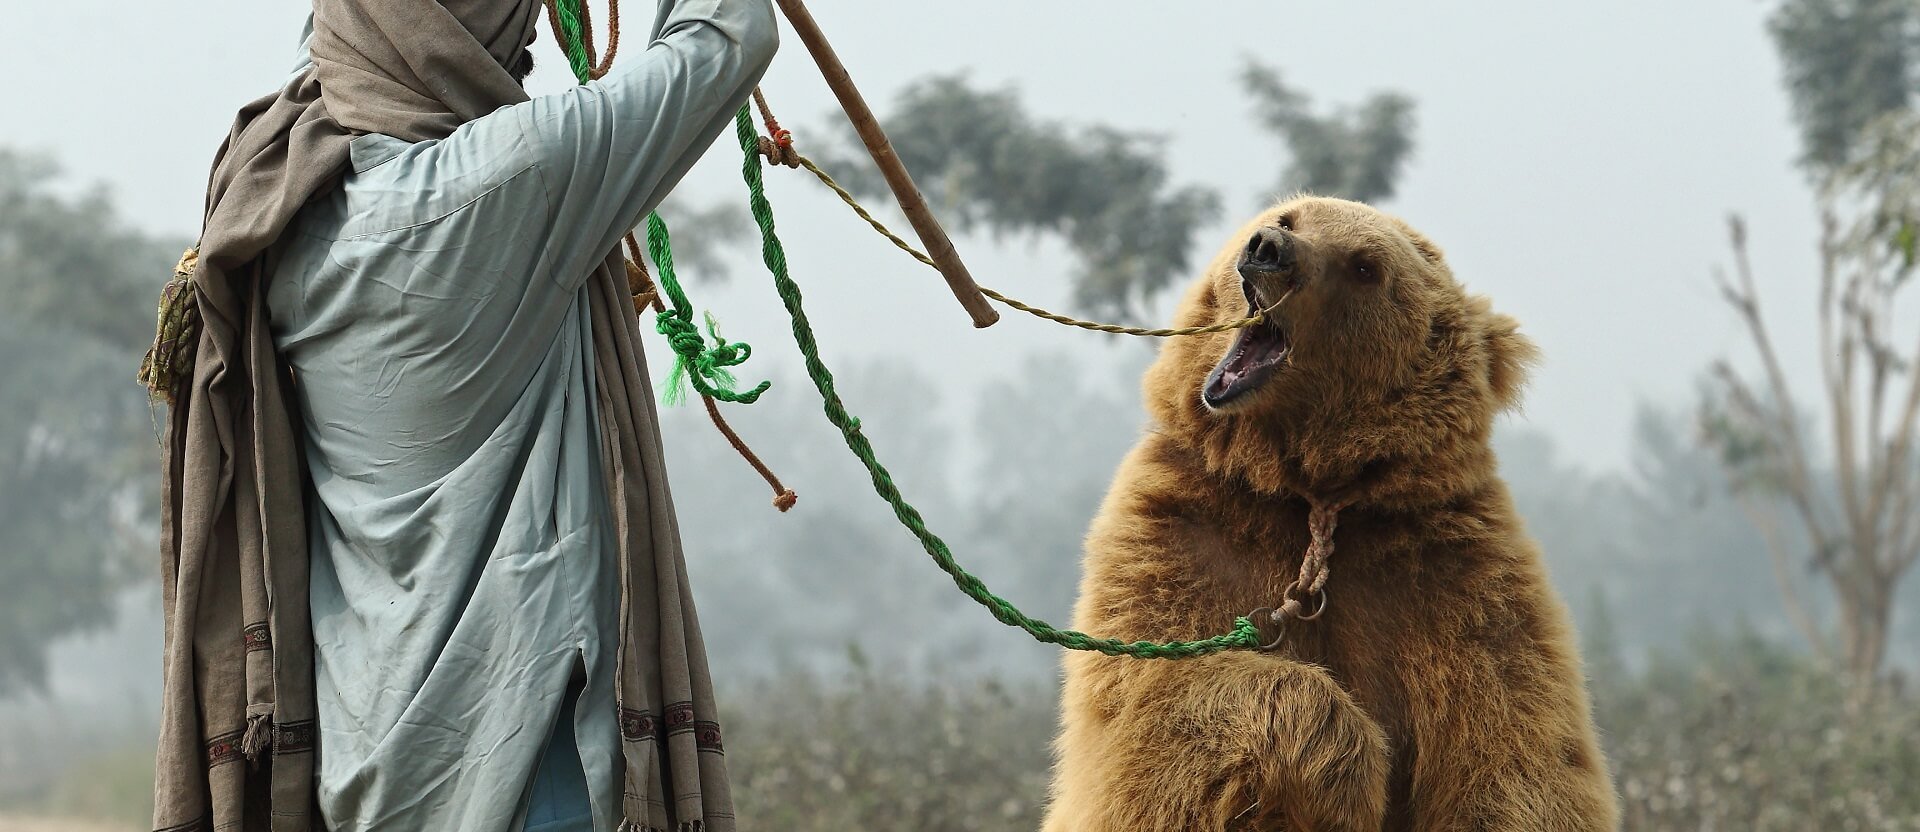 Bear baiting in Pakistan